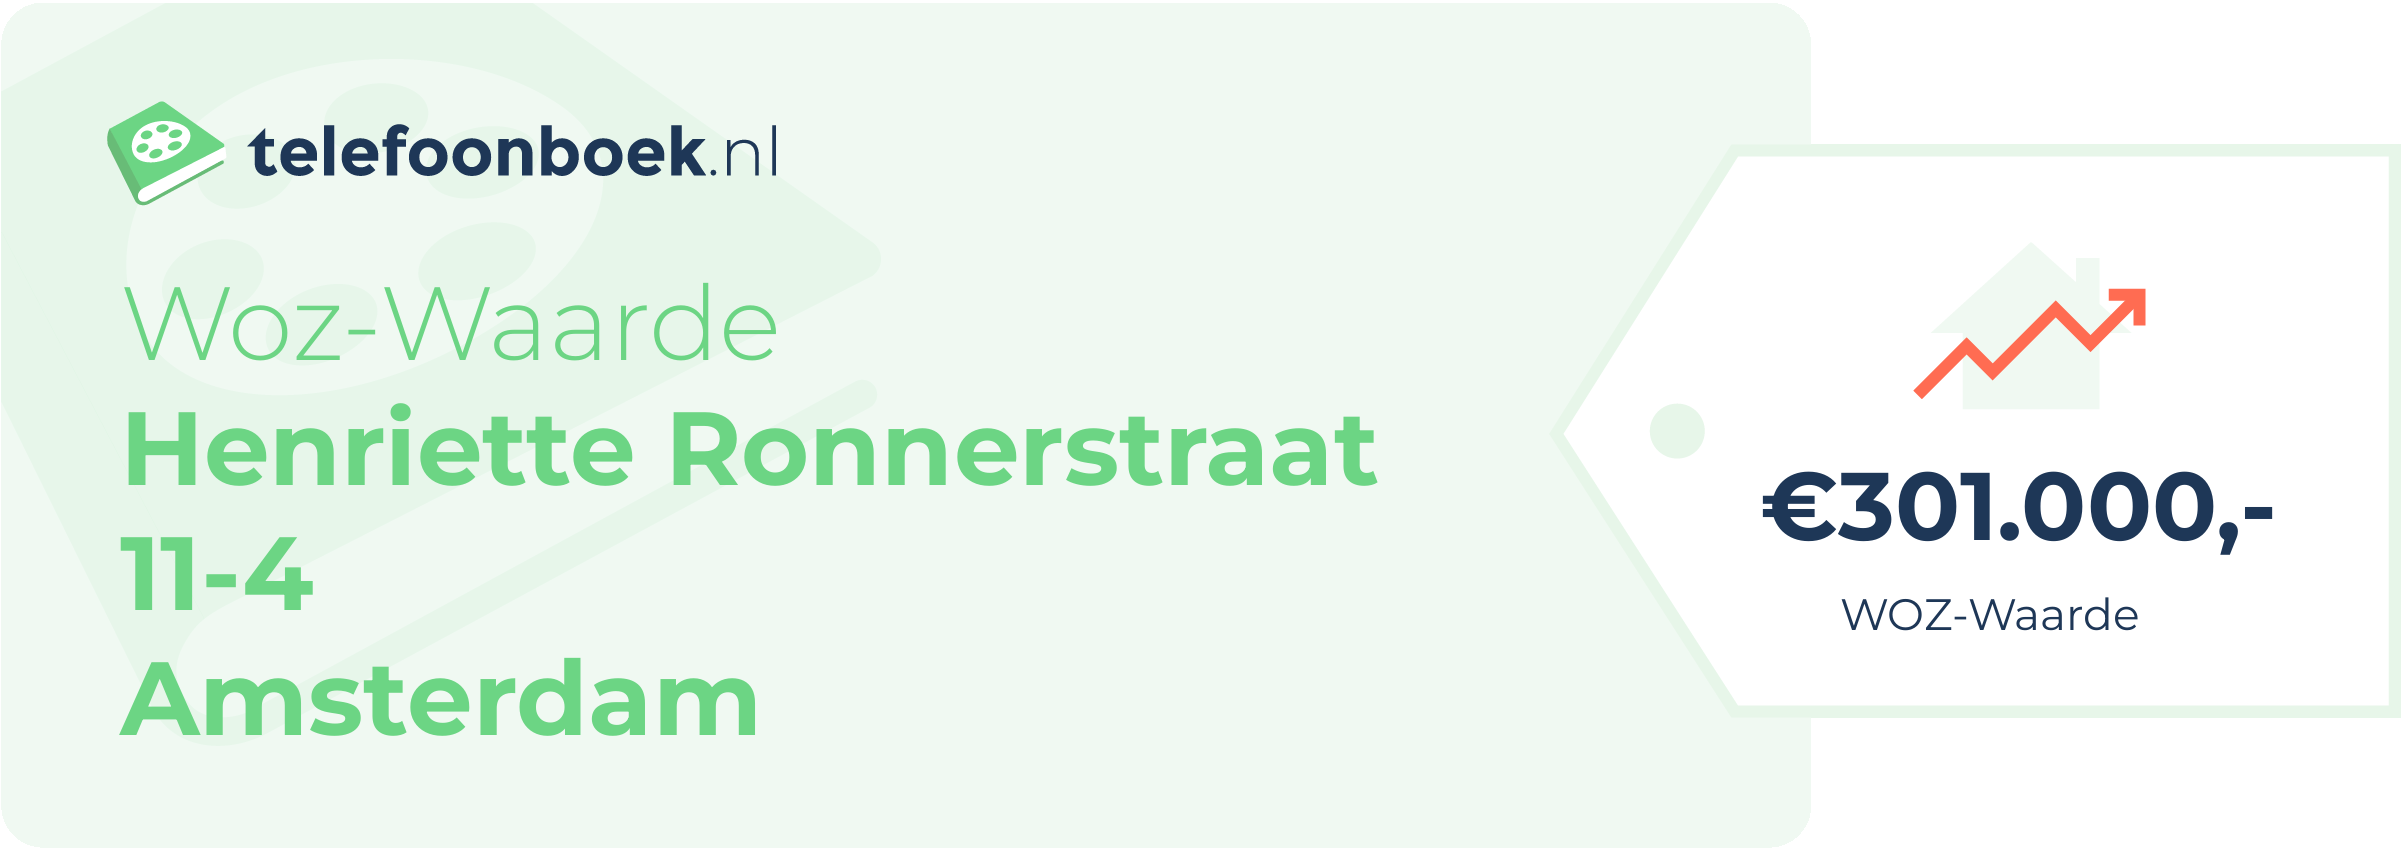 WOZ-waarde Henriette Ronnerstraat 11-4 Amsterdam